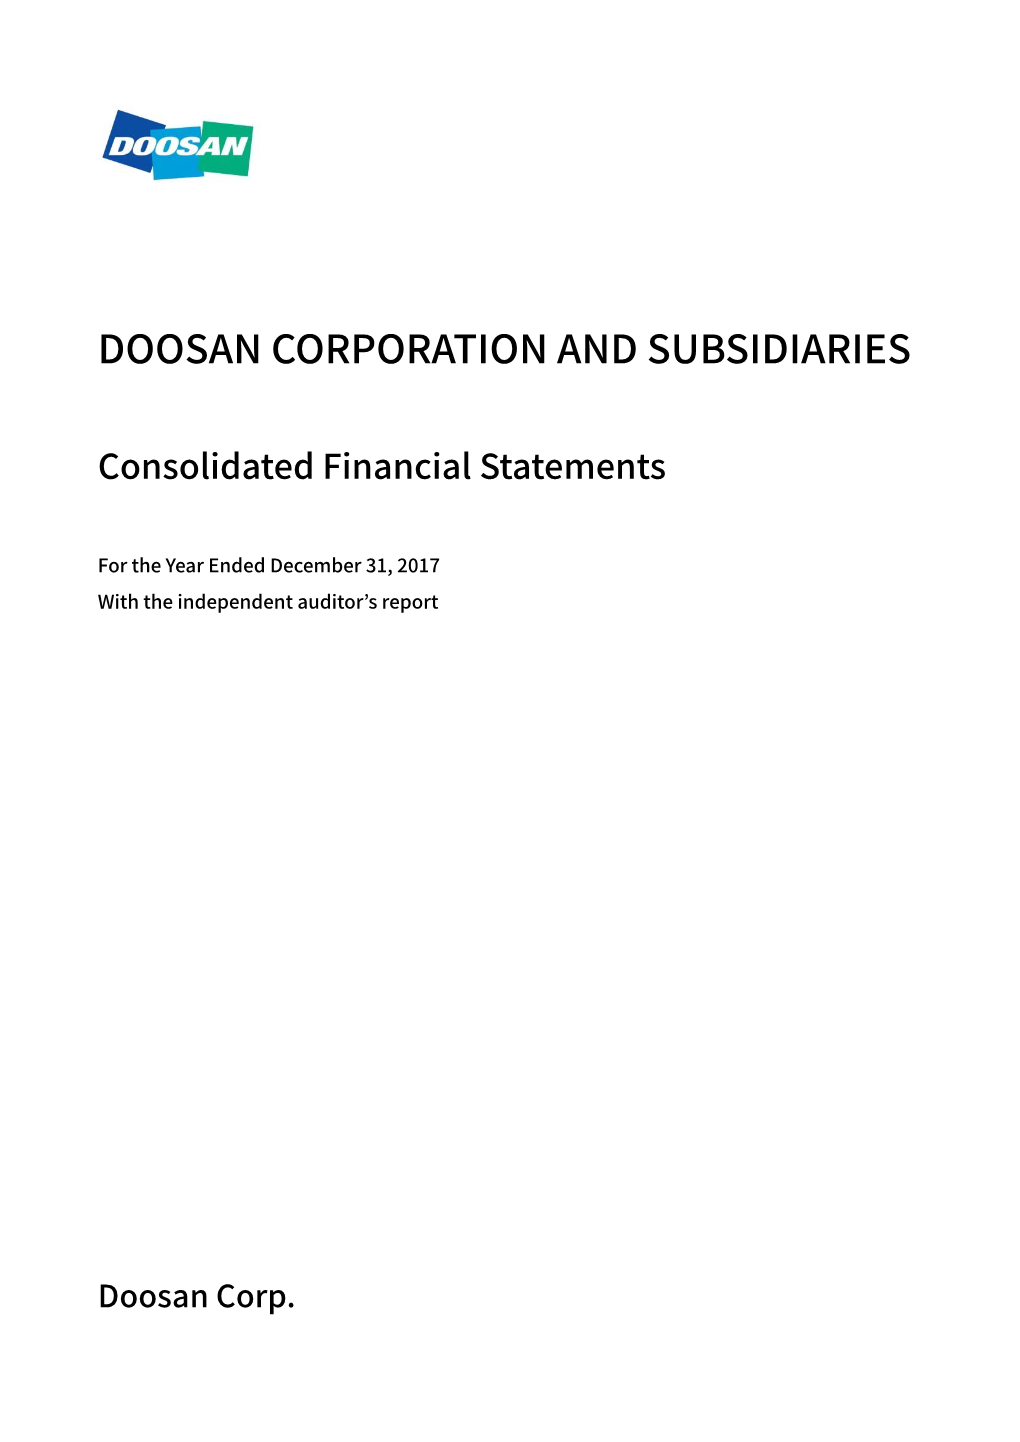 Doosan Corporation and Subsidiaries